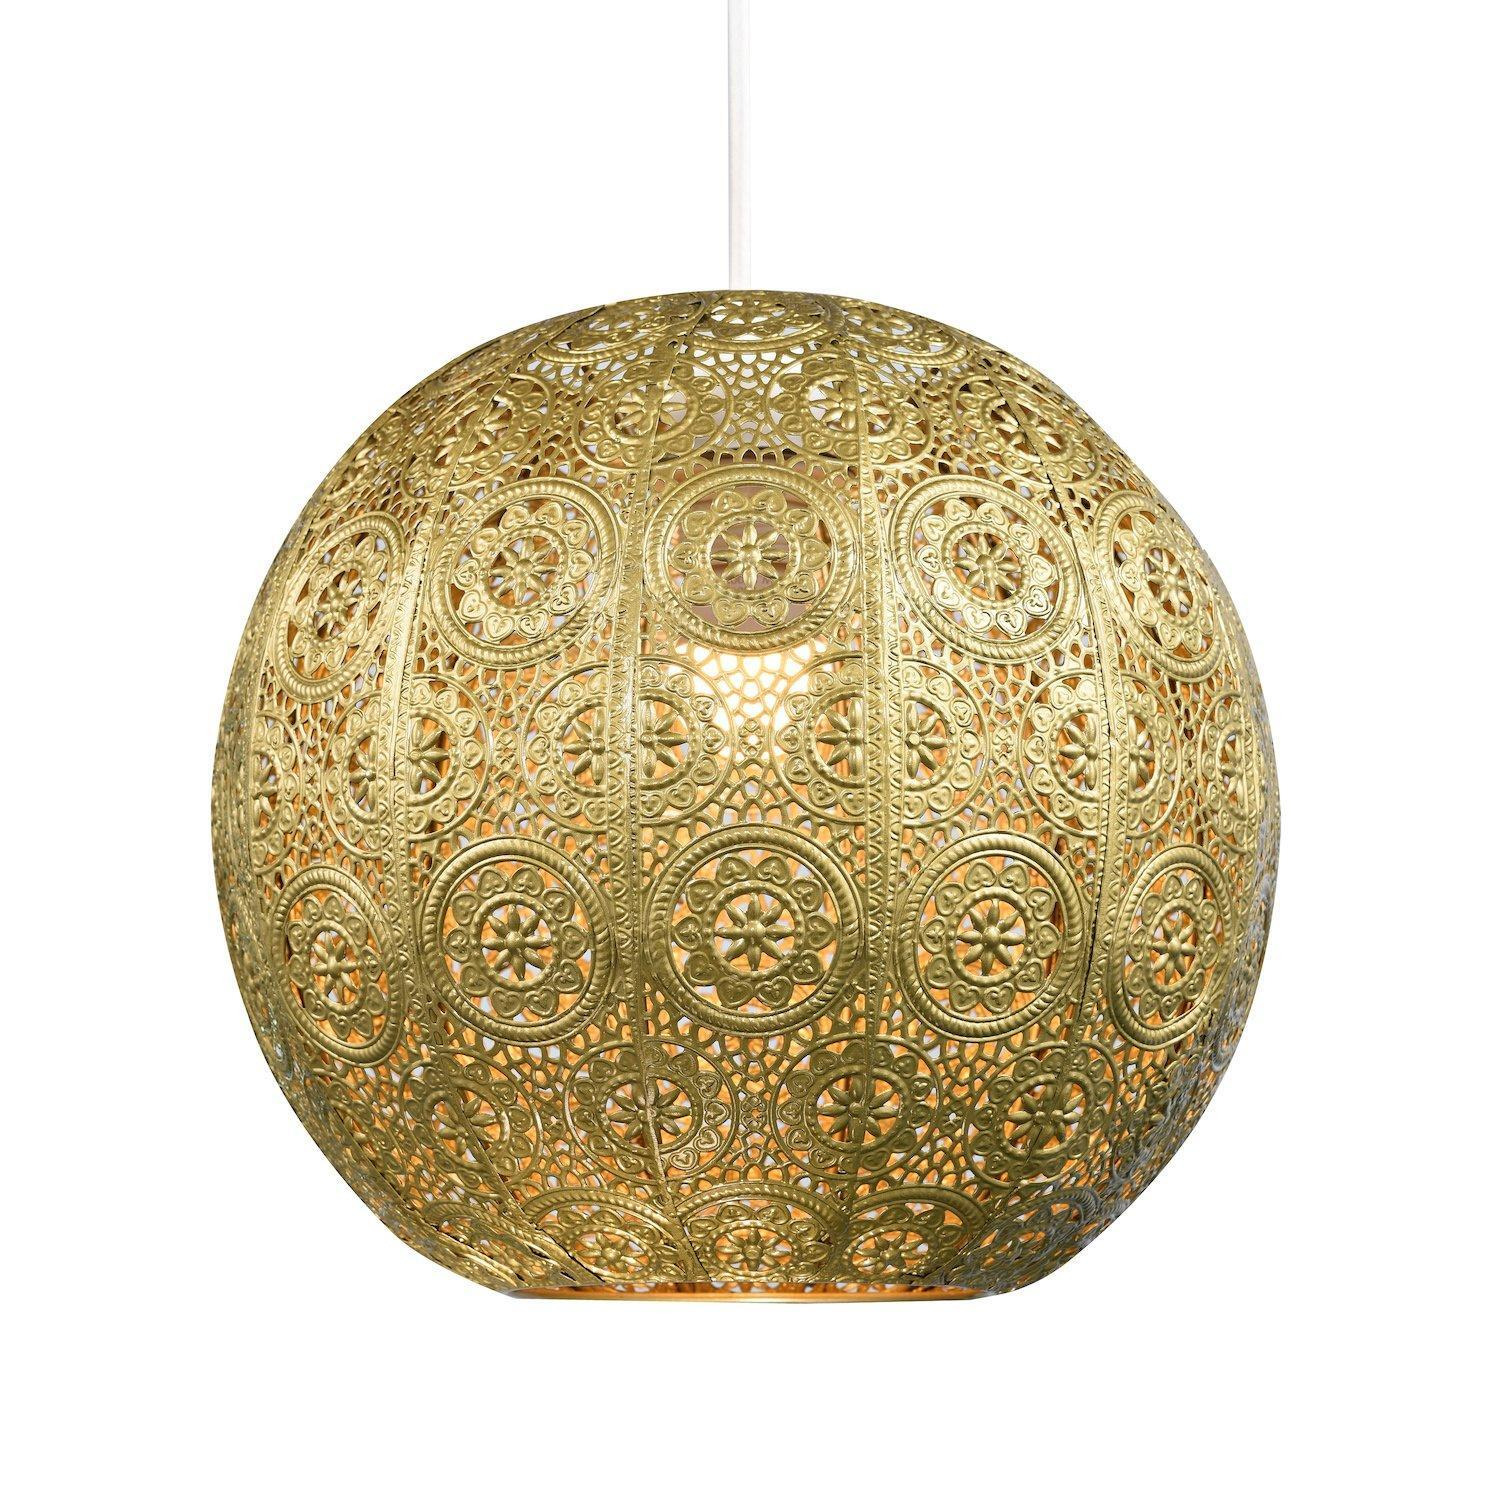 30cm Spherical Moroccan Pendant Lamp Shade in Satin Gold Metal - Vintage Design - image 1